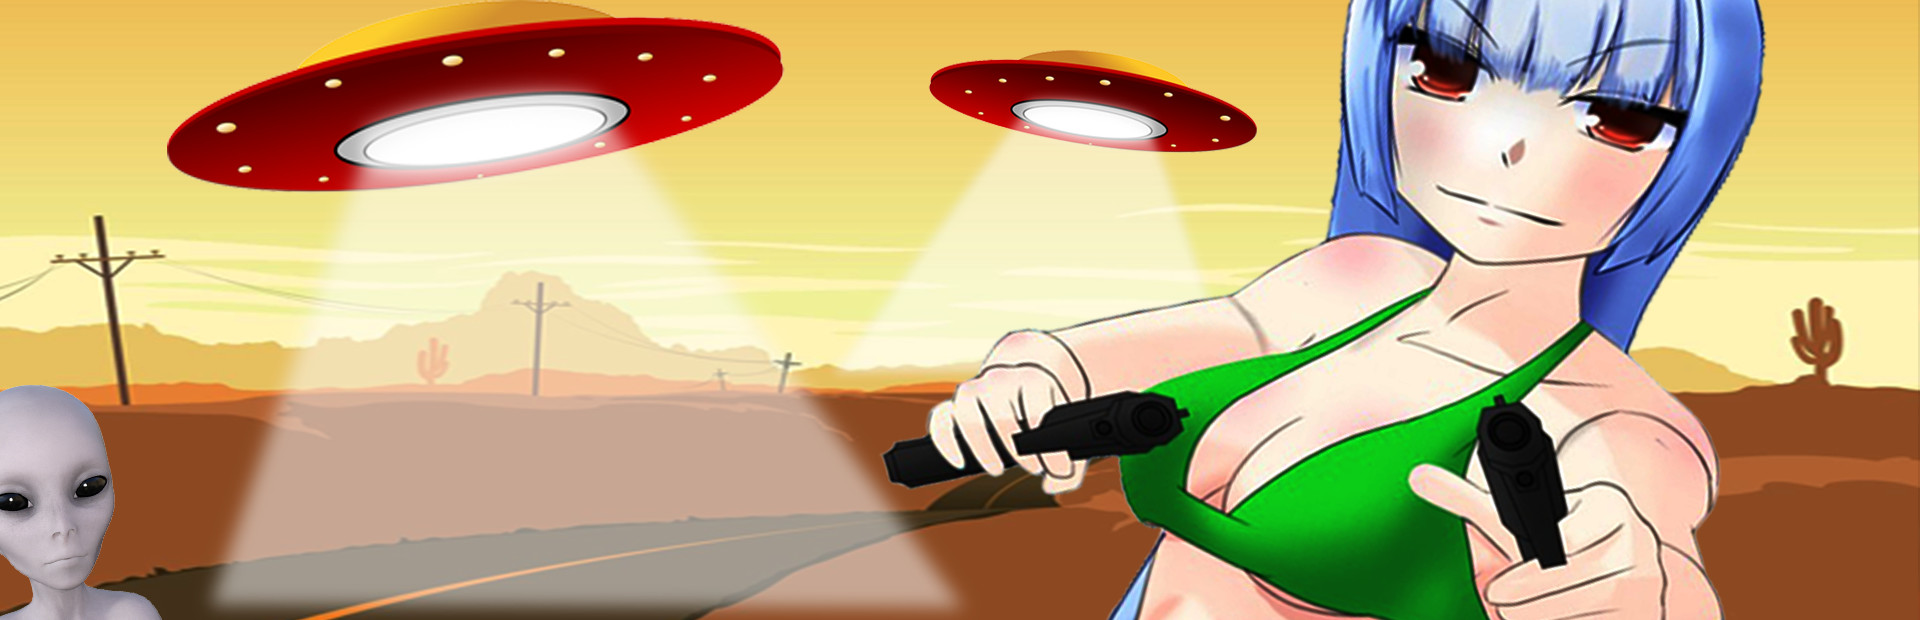 Hentai - Area 51 cover image